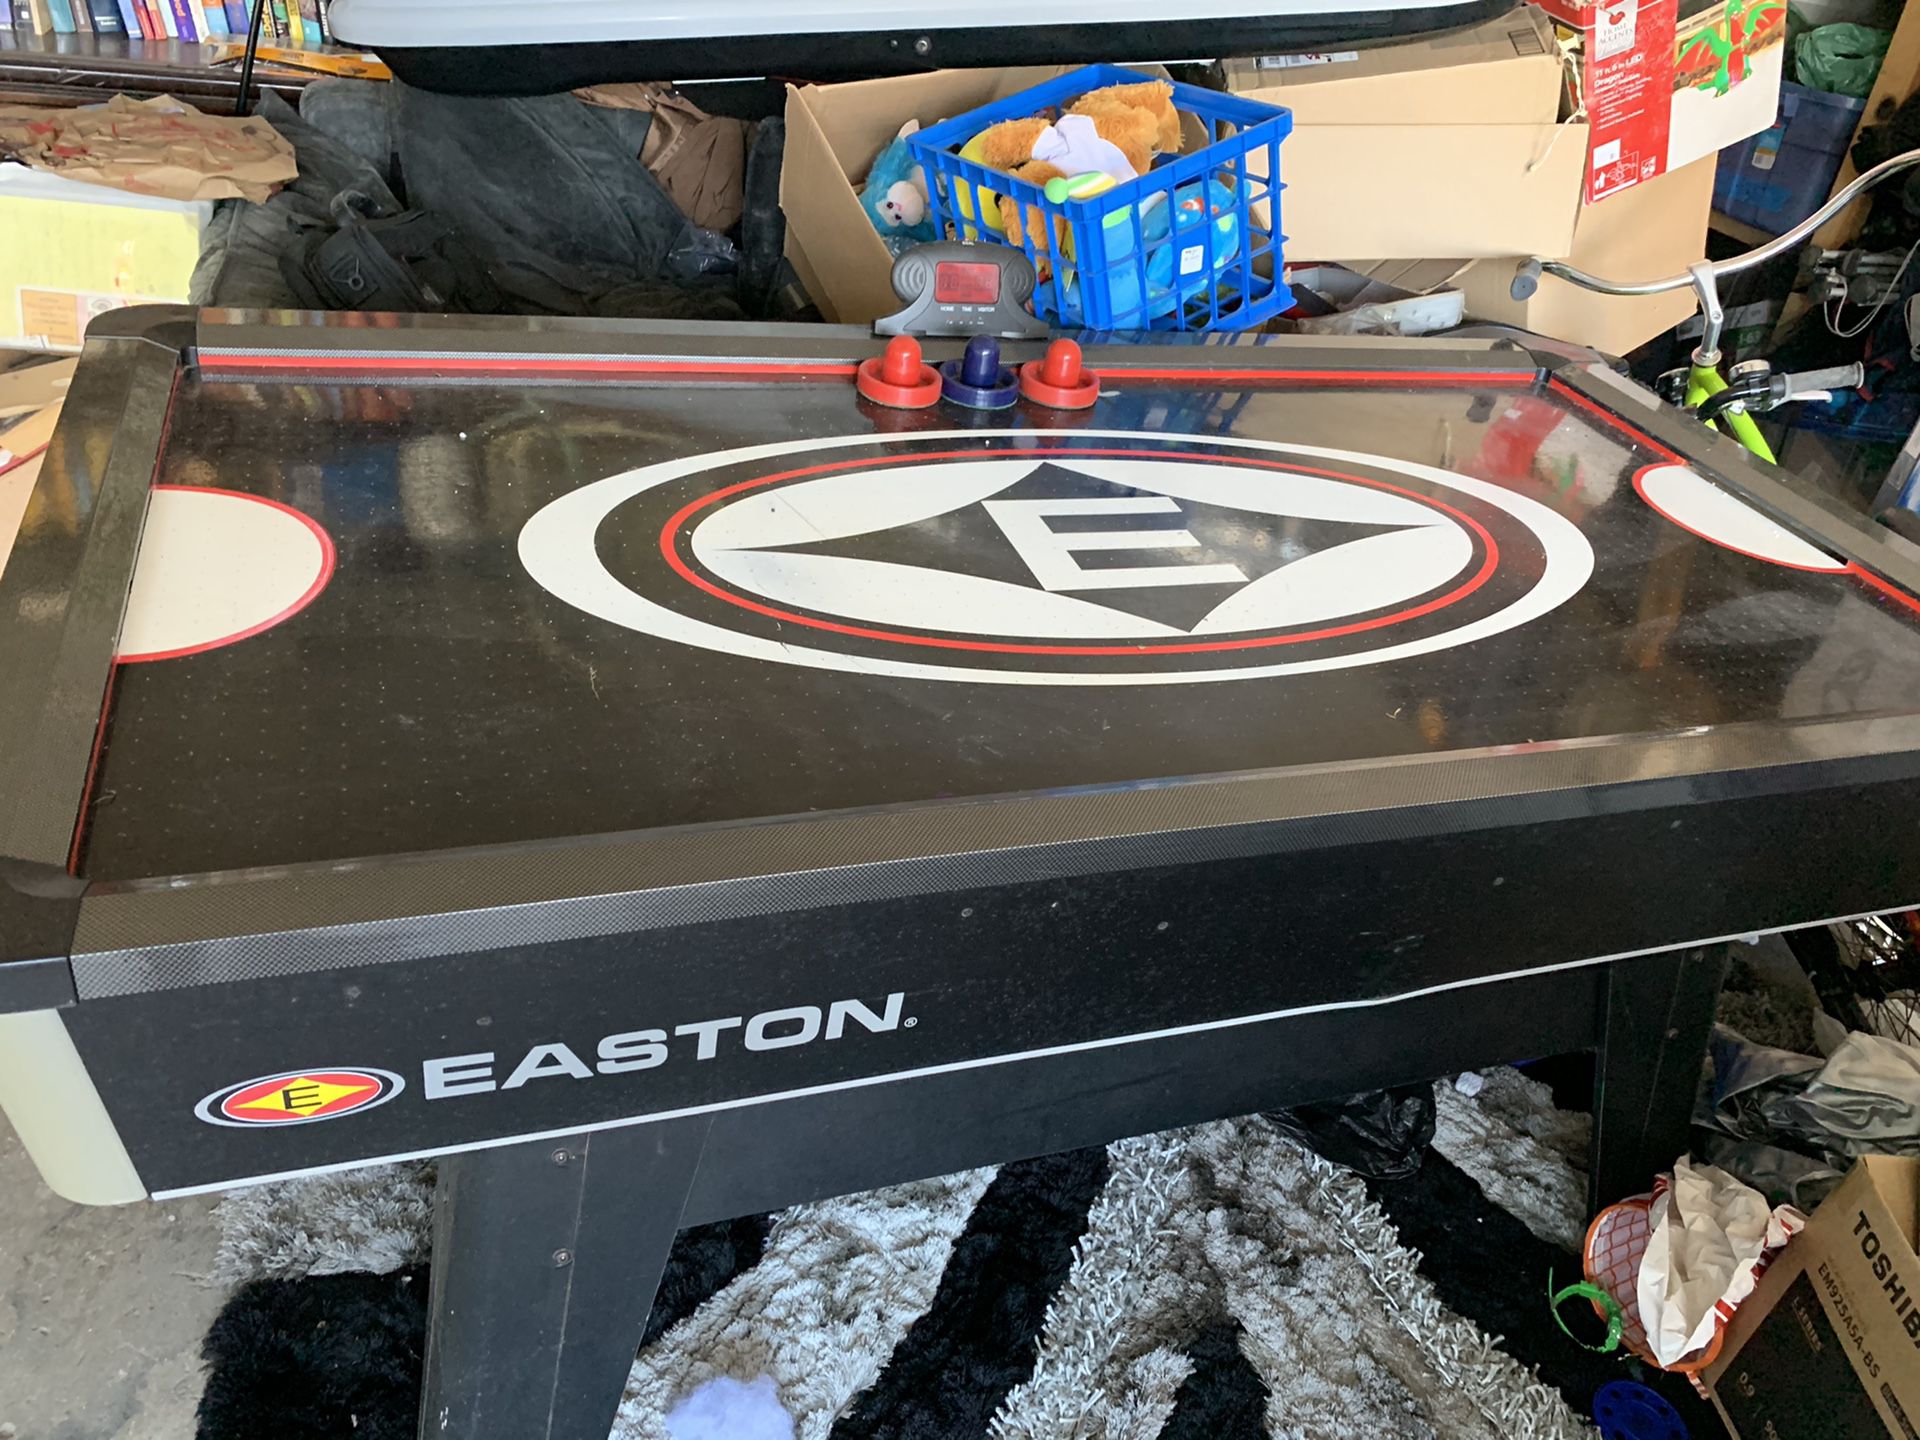 Easton Air hockey machine $300